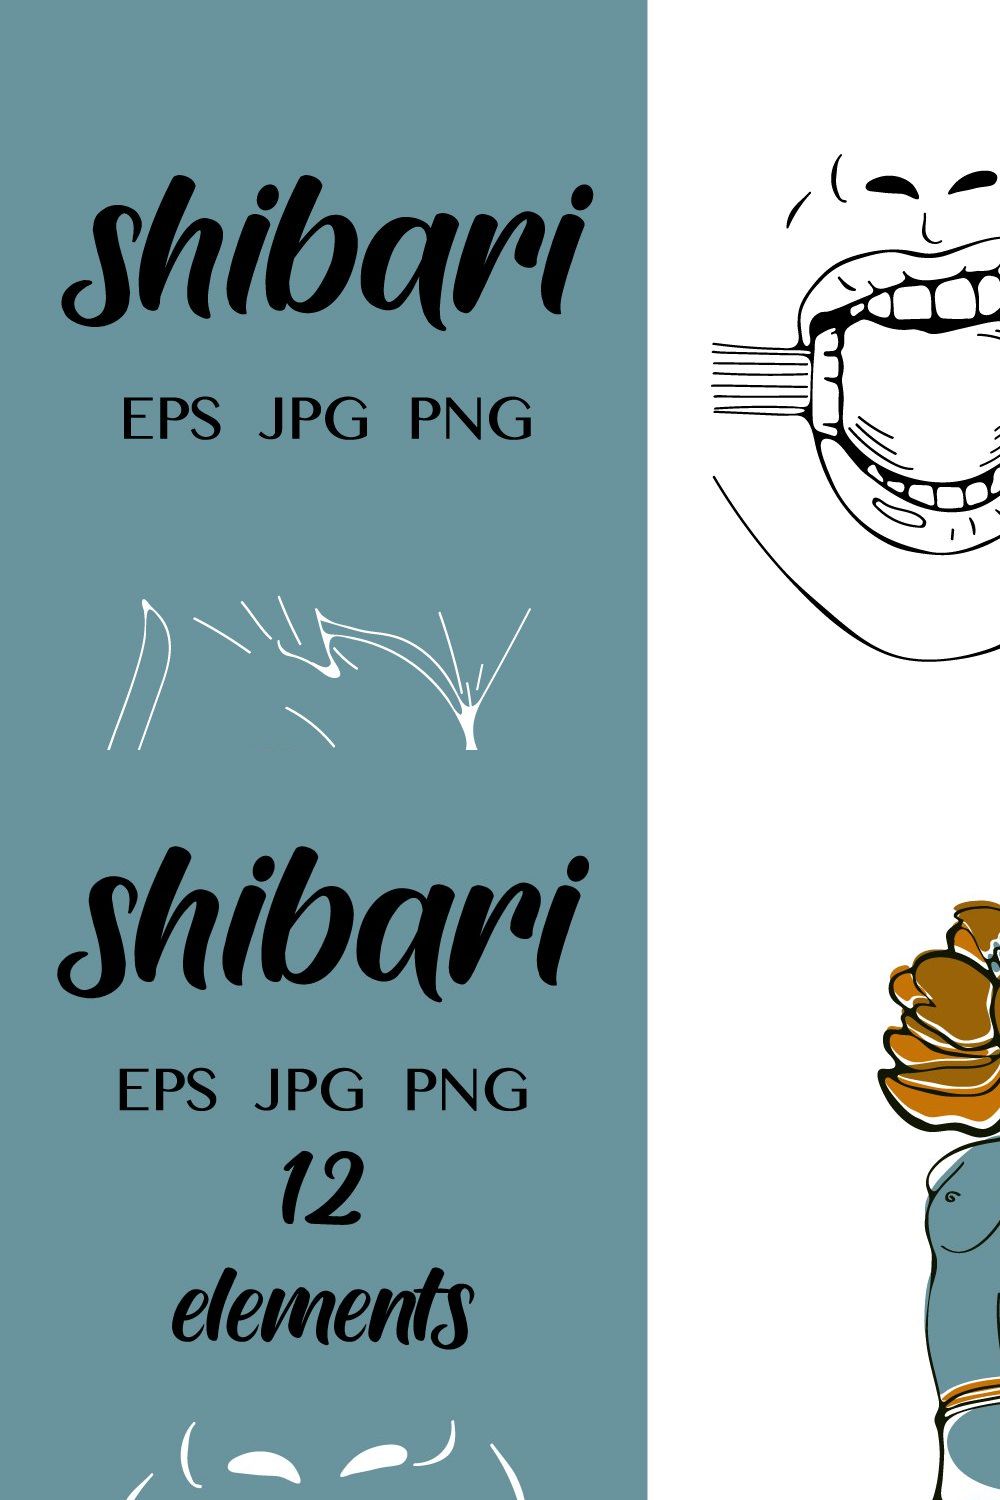 Shibari pinterest preview image.